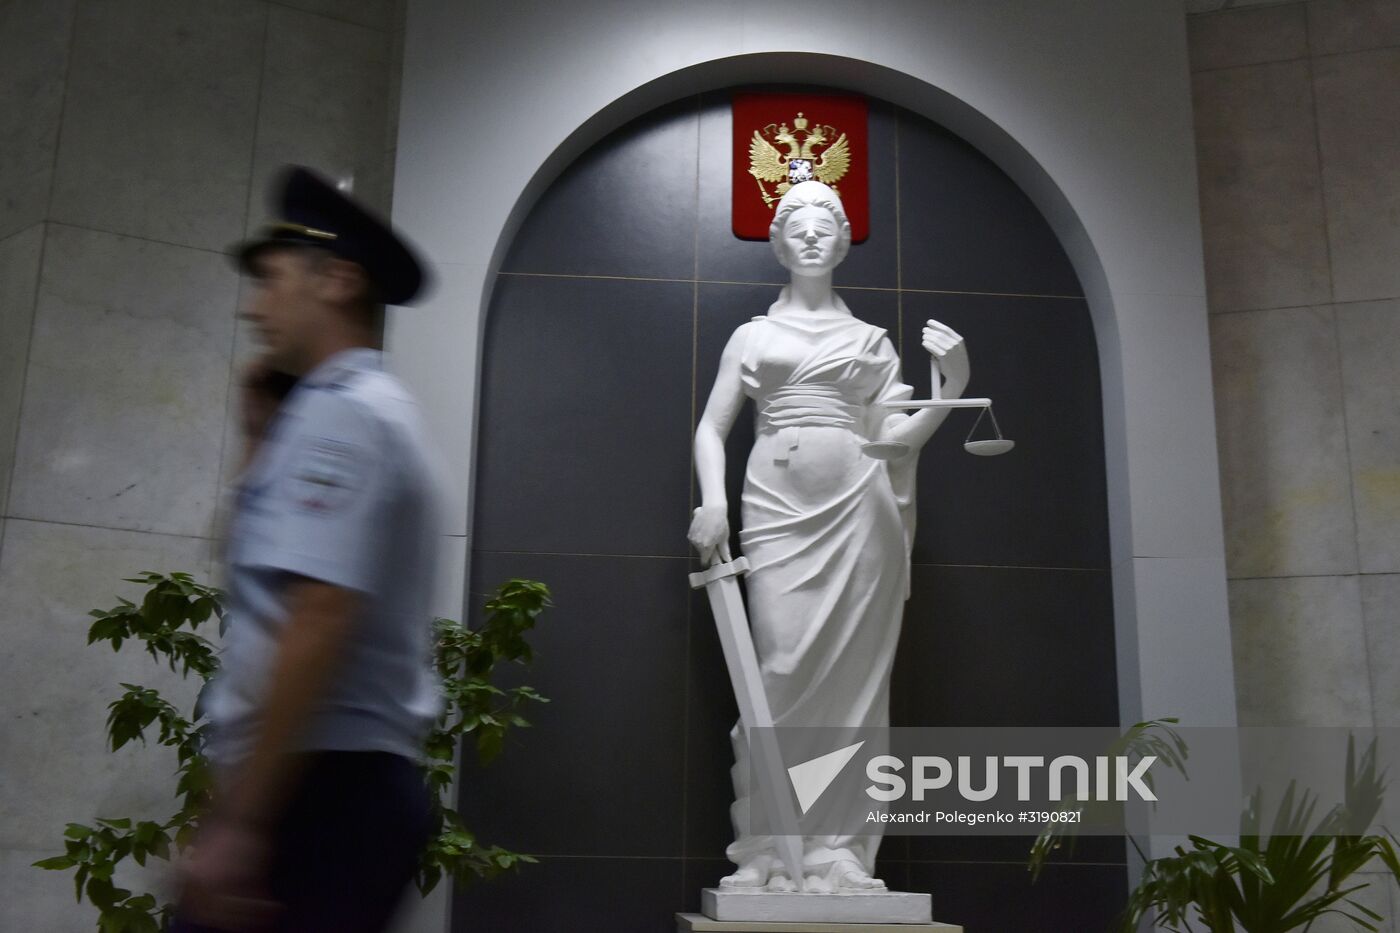 Crimean Supreme Court pronouncing sentence on case of riots outside Crimean parliament on February 26, 2014